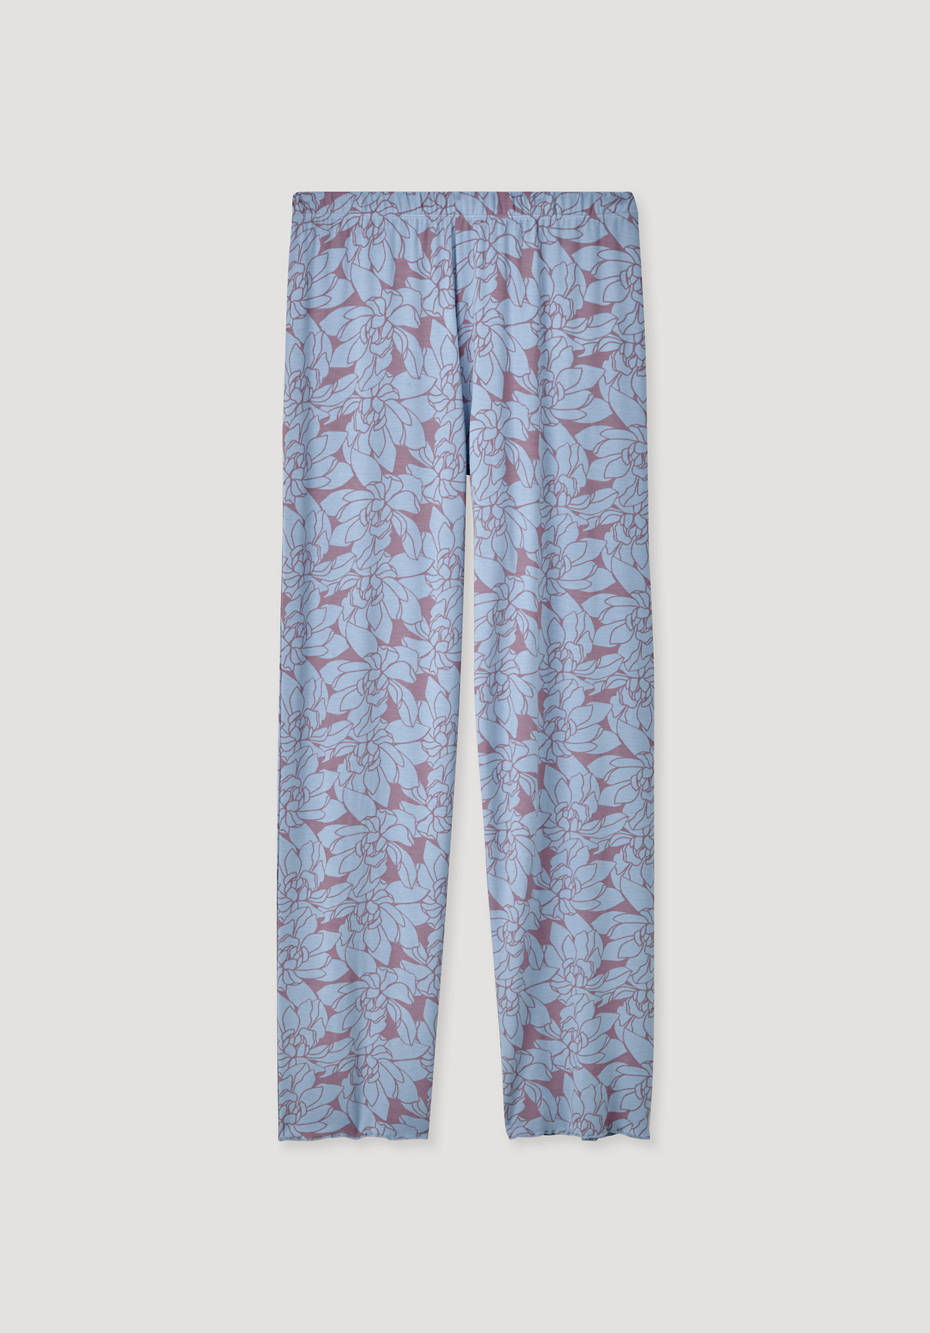 Sleep trousers made from TENCEL ™ Modal